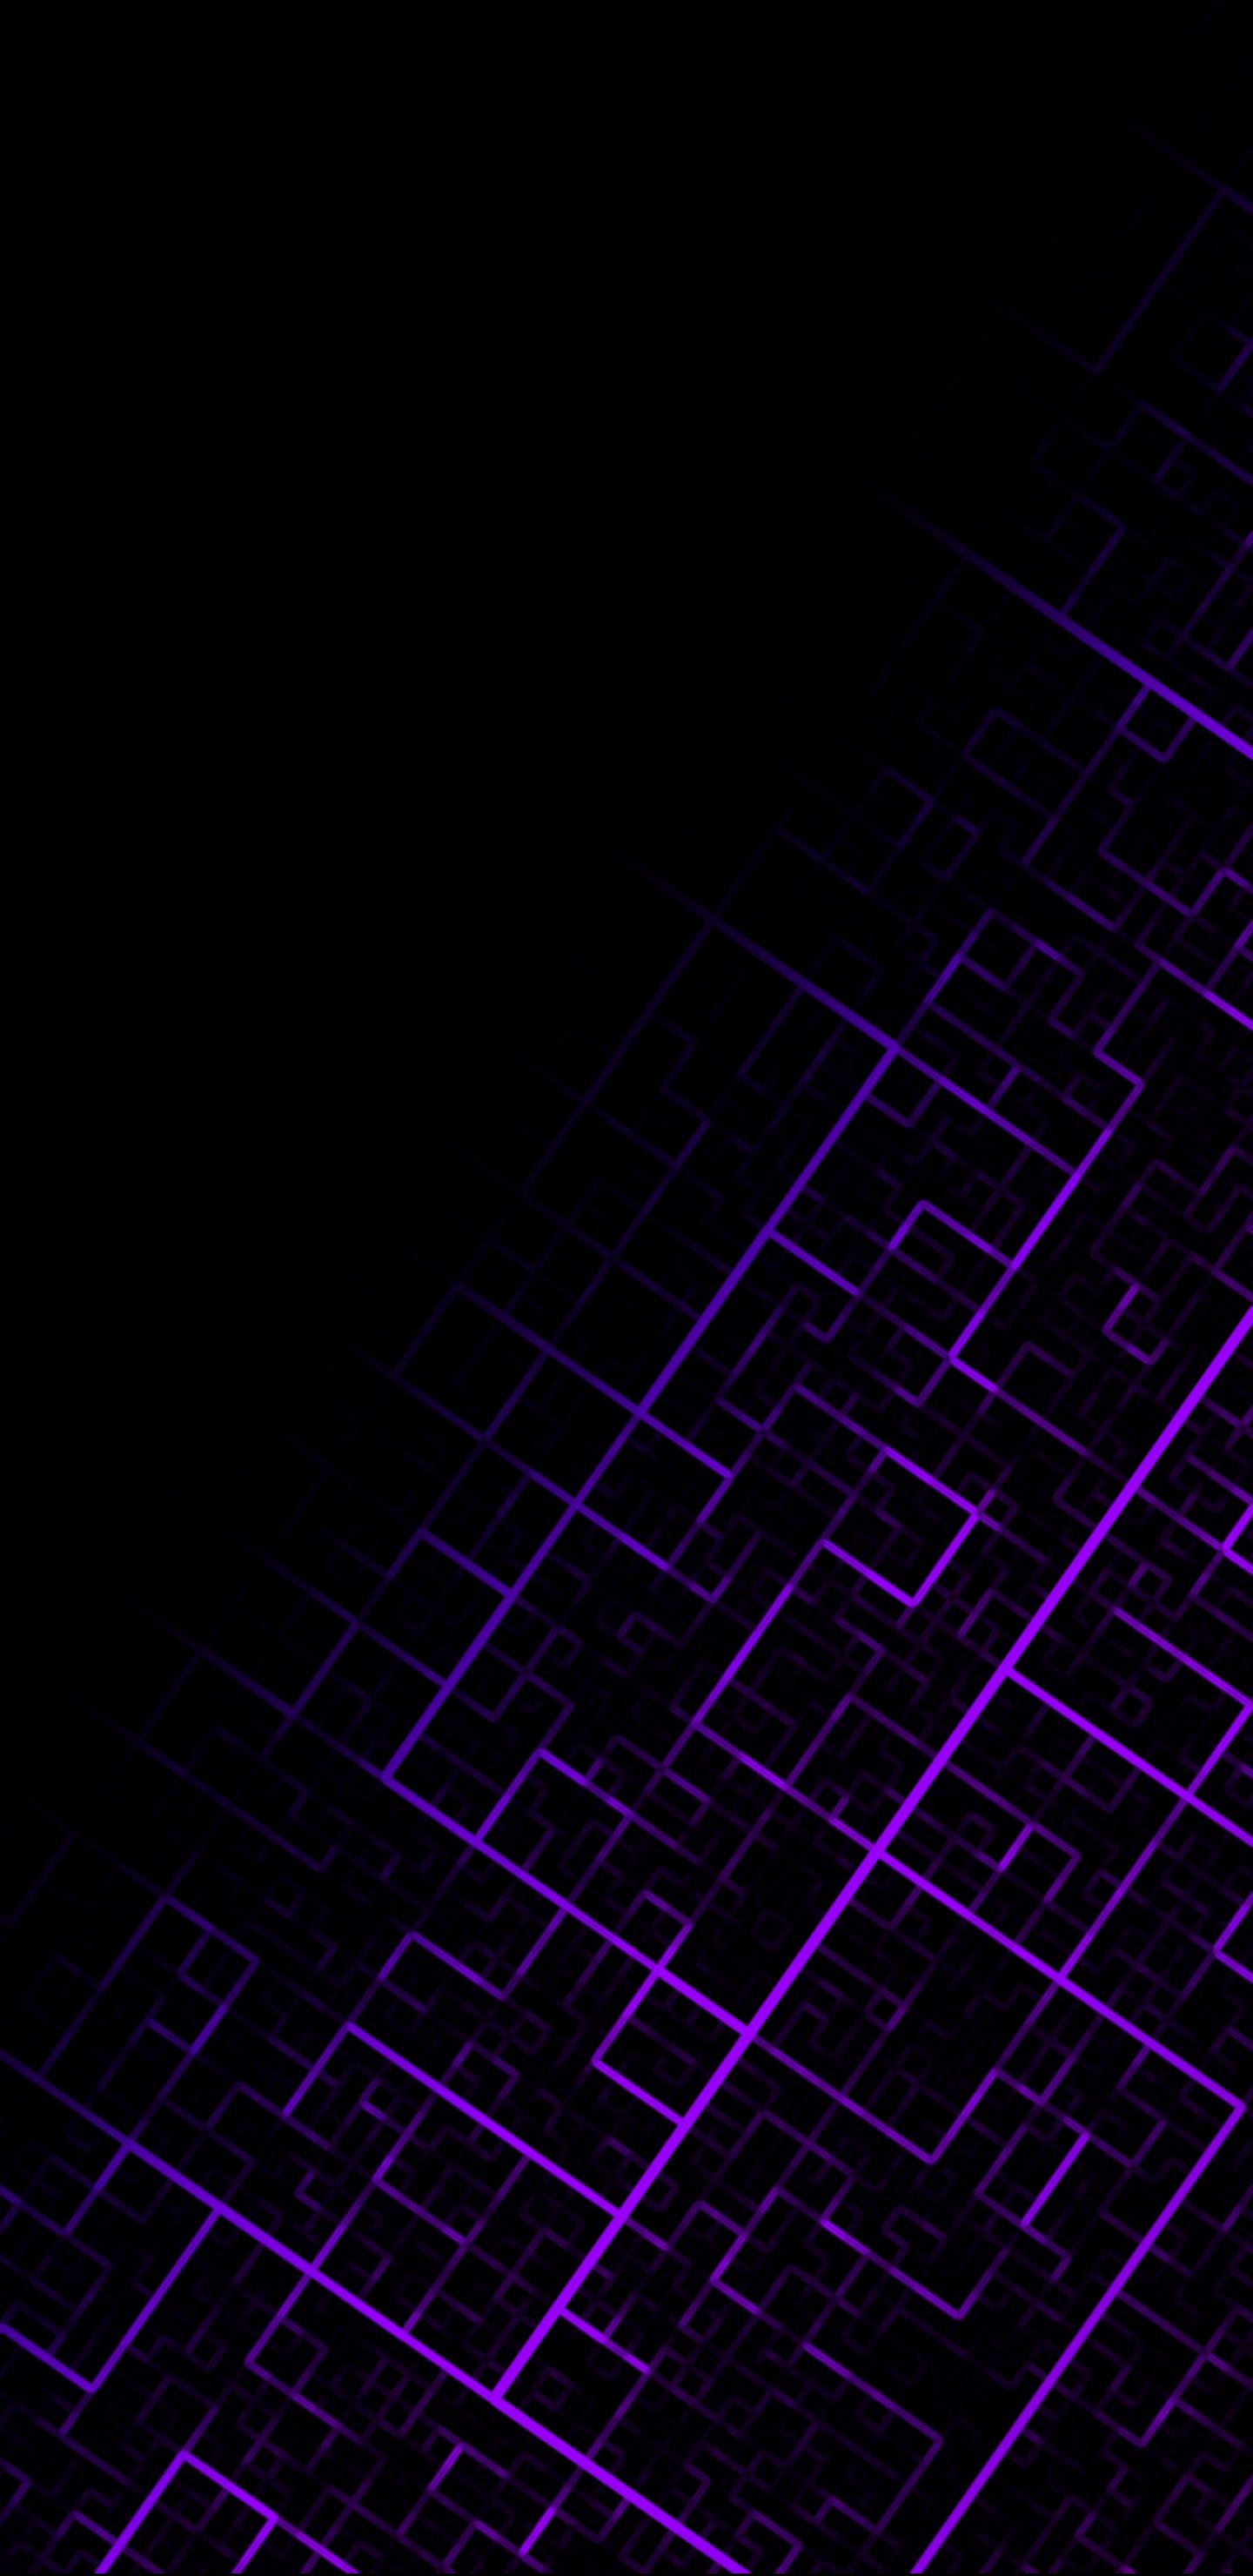 dark, violet, lines, purple, geometric, abstract, pattern lock screen backgrounds